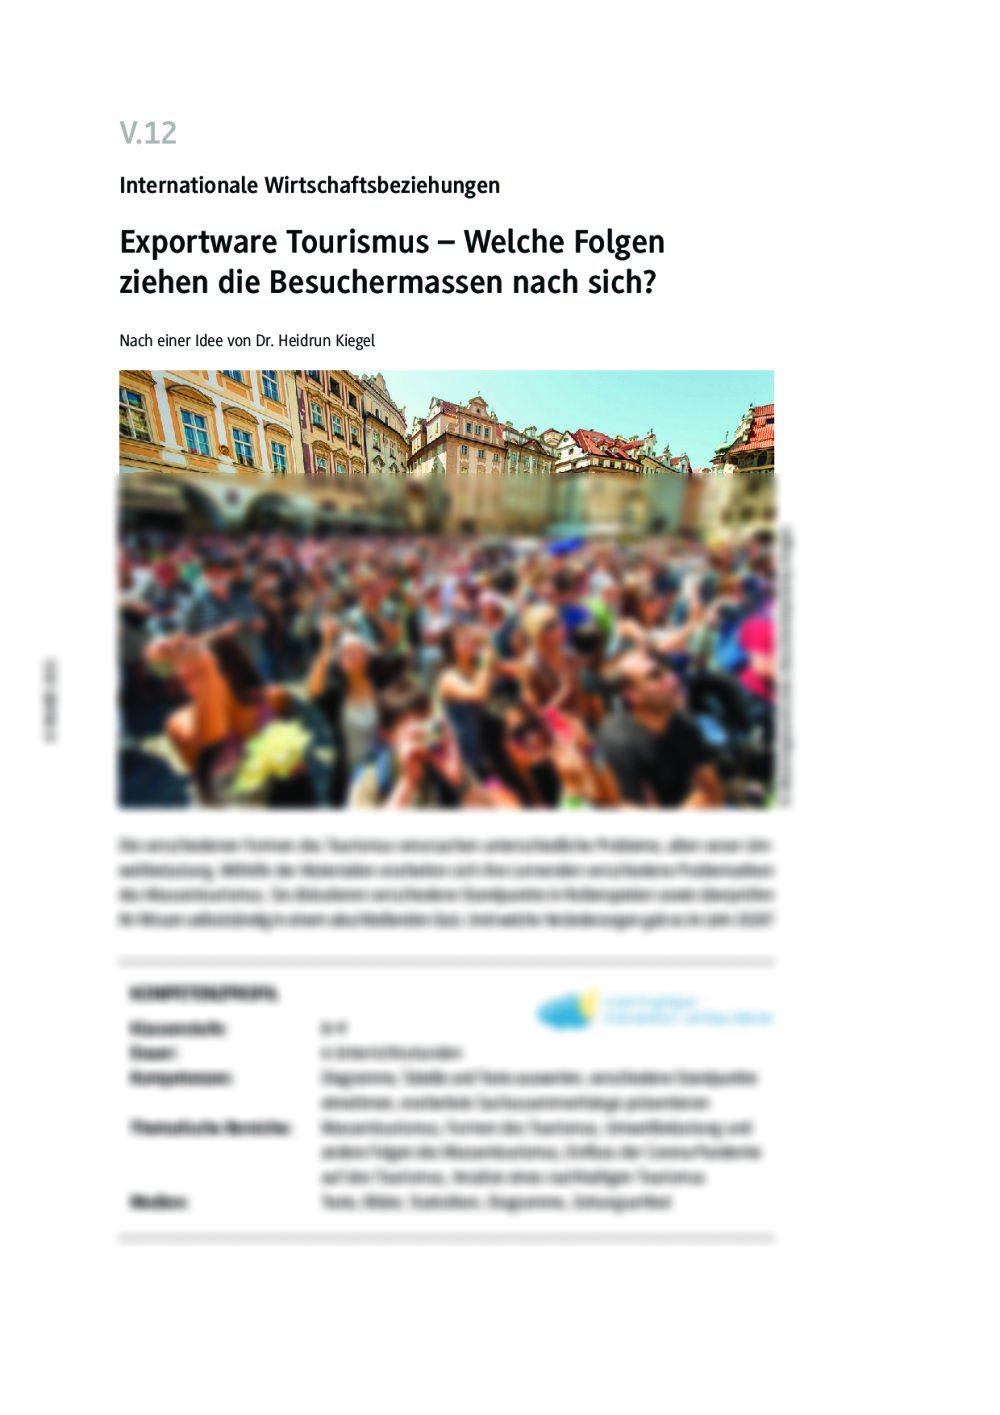 Exportware Tourismus - Seite 1